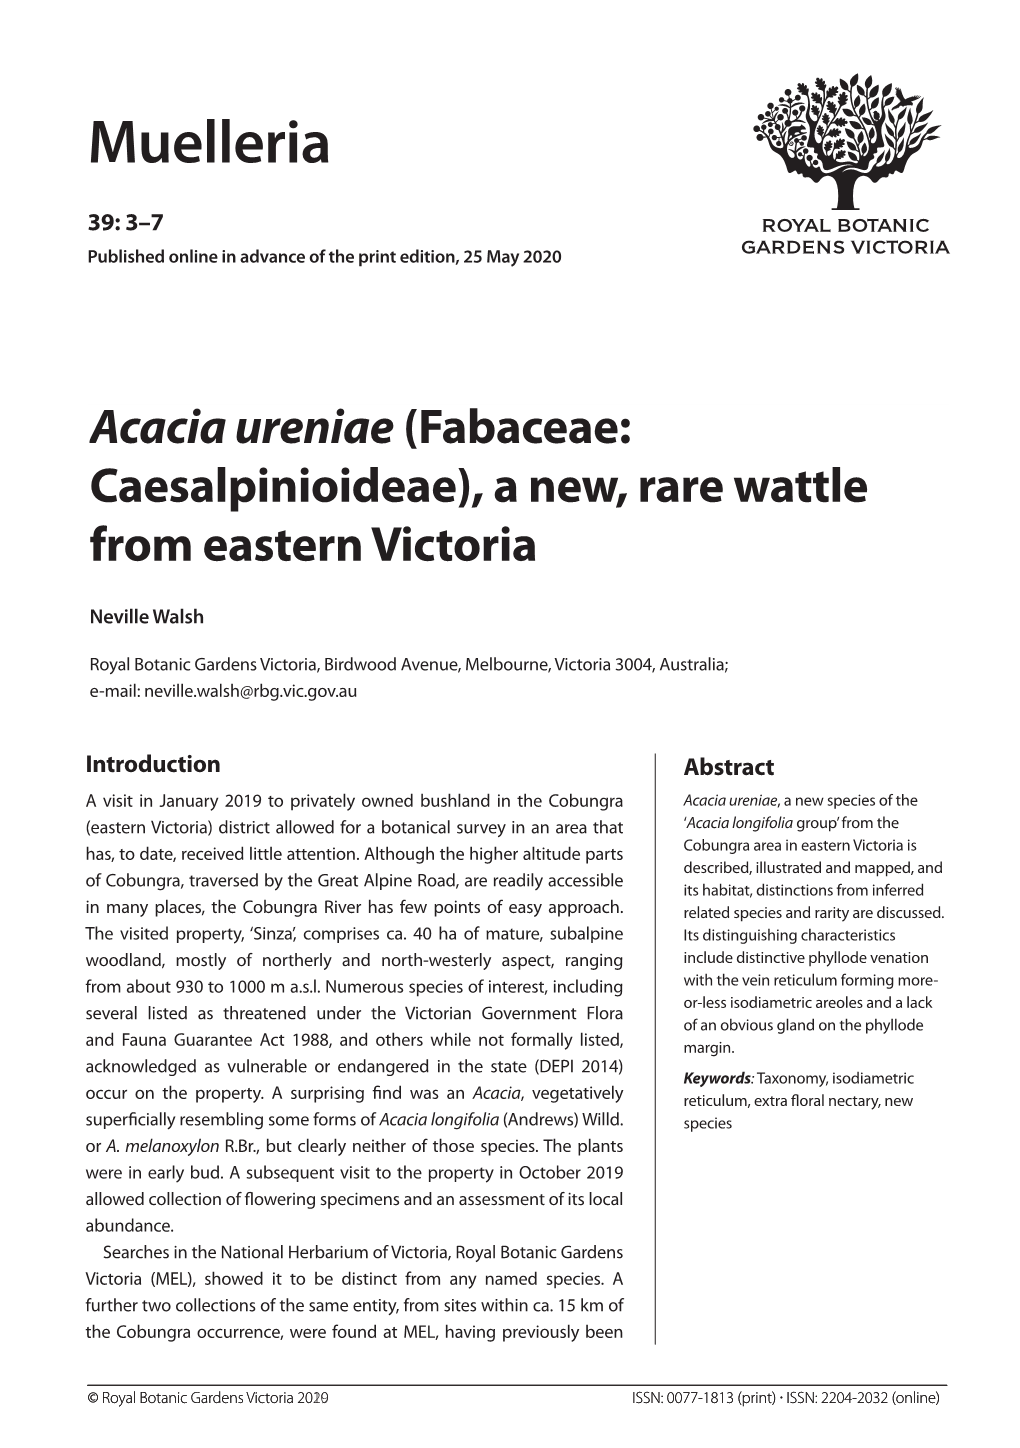 Acacia Ureniae (Fabaceae: Caesalpinioideae), a New, Rare Wattle from Eastern Victoria